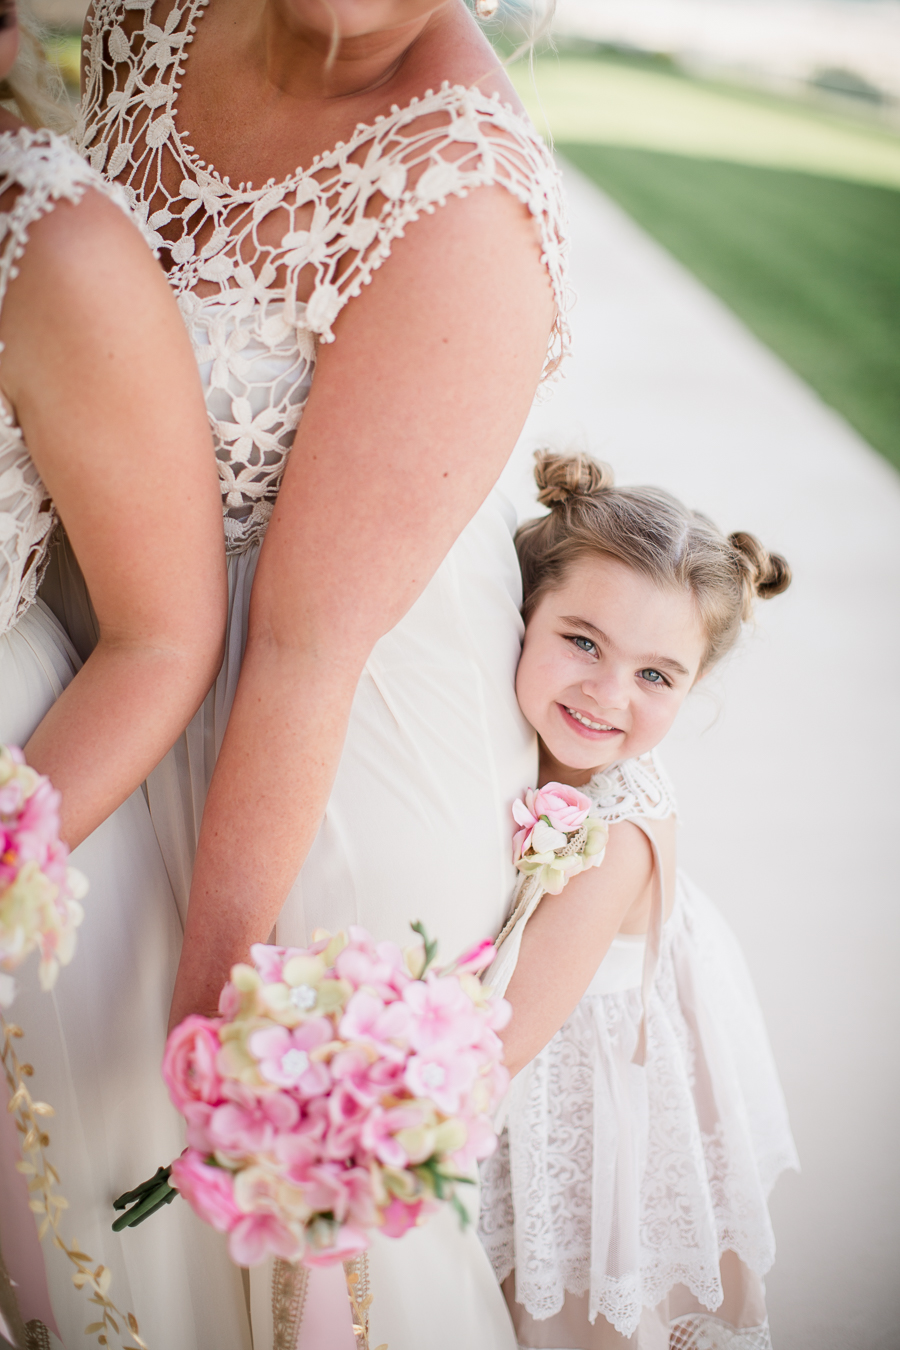 Flower girl hugging bride from behind at this Daytona Beach Wedding by Destination Wedding Photographer, Amanda May Photos.